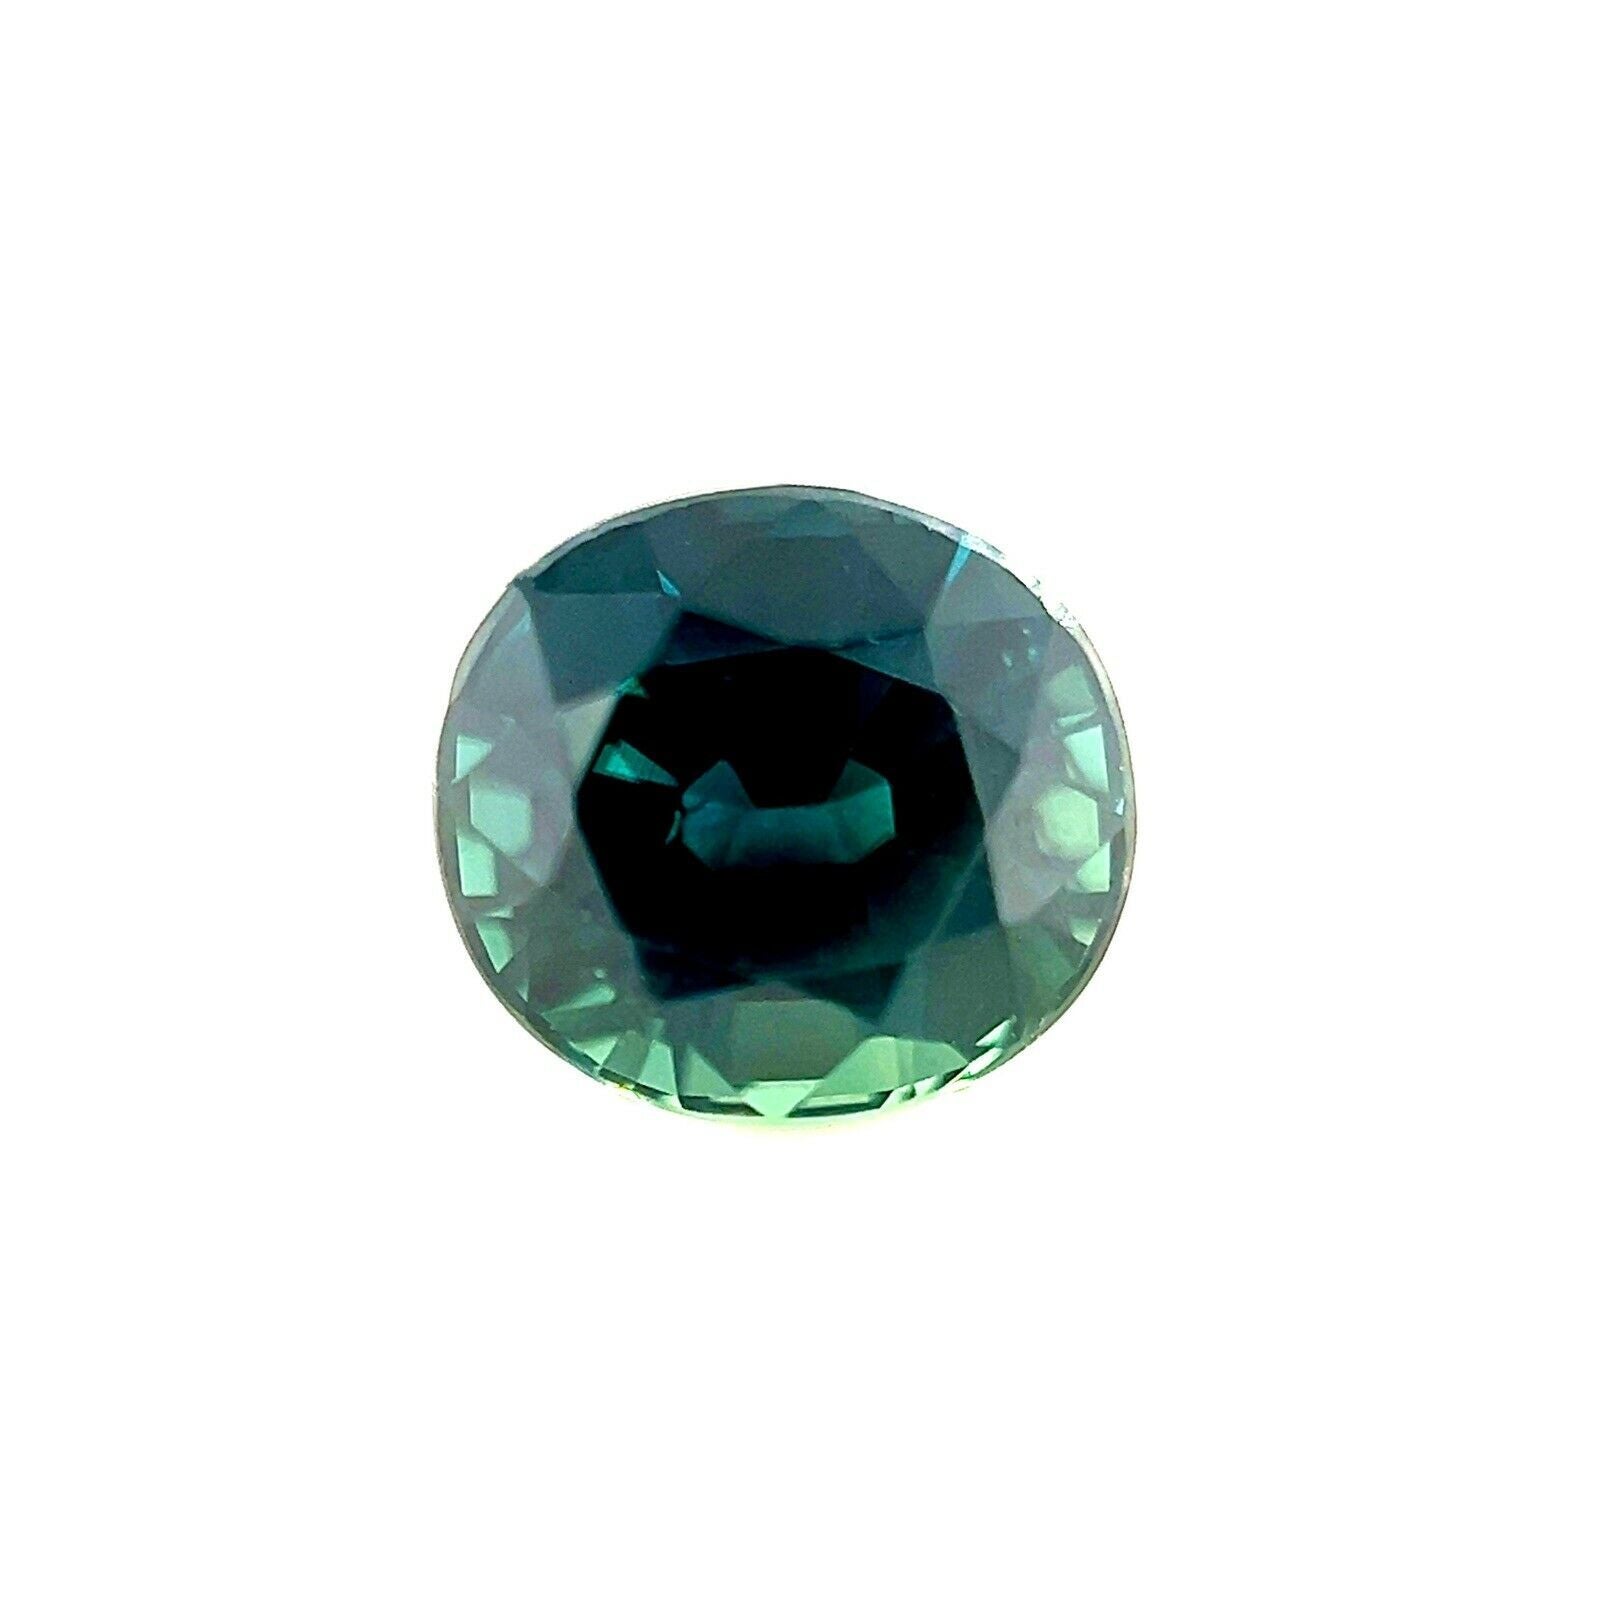 Pierre précieuse de taille ovale non traitée, saphir bleu vert profond certifié GRA de 1,61 carat